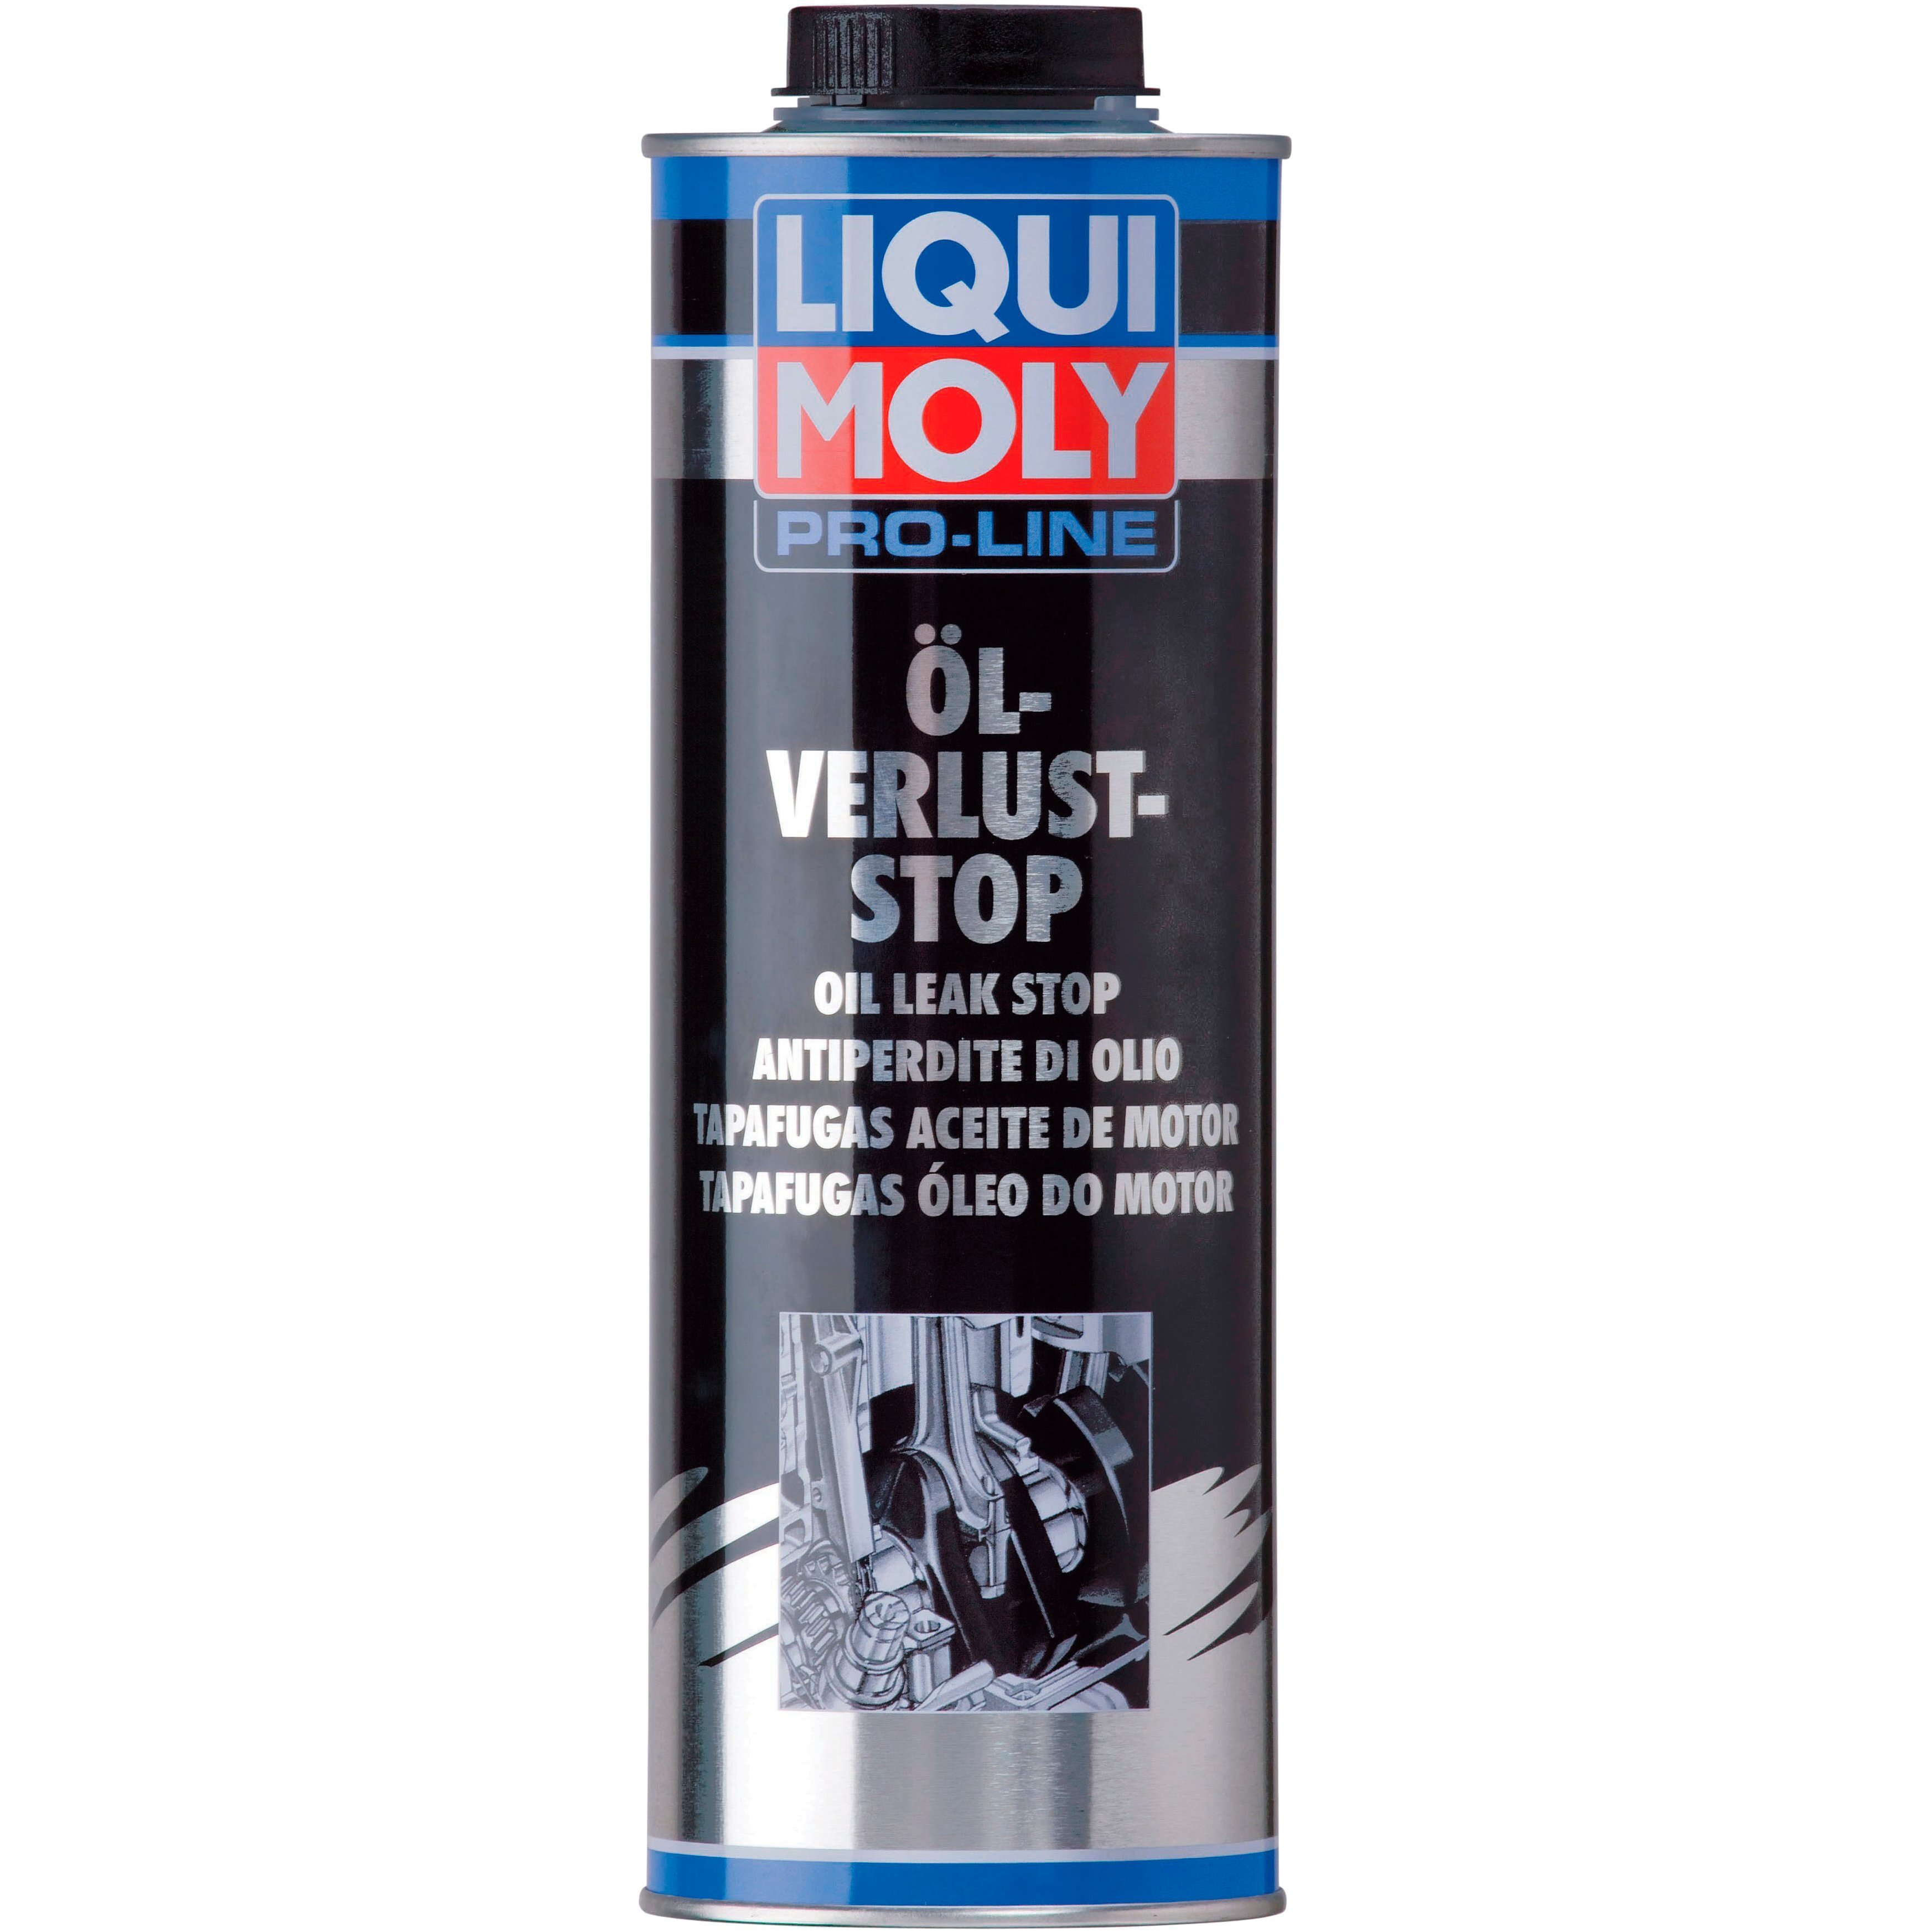 Средство Liqui Moly для прекращения утечки моторного масла Pro-Line Ol-Verlust-Stop 1л (4100420051821) фото 1